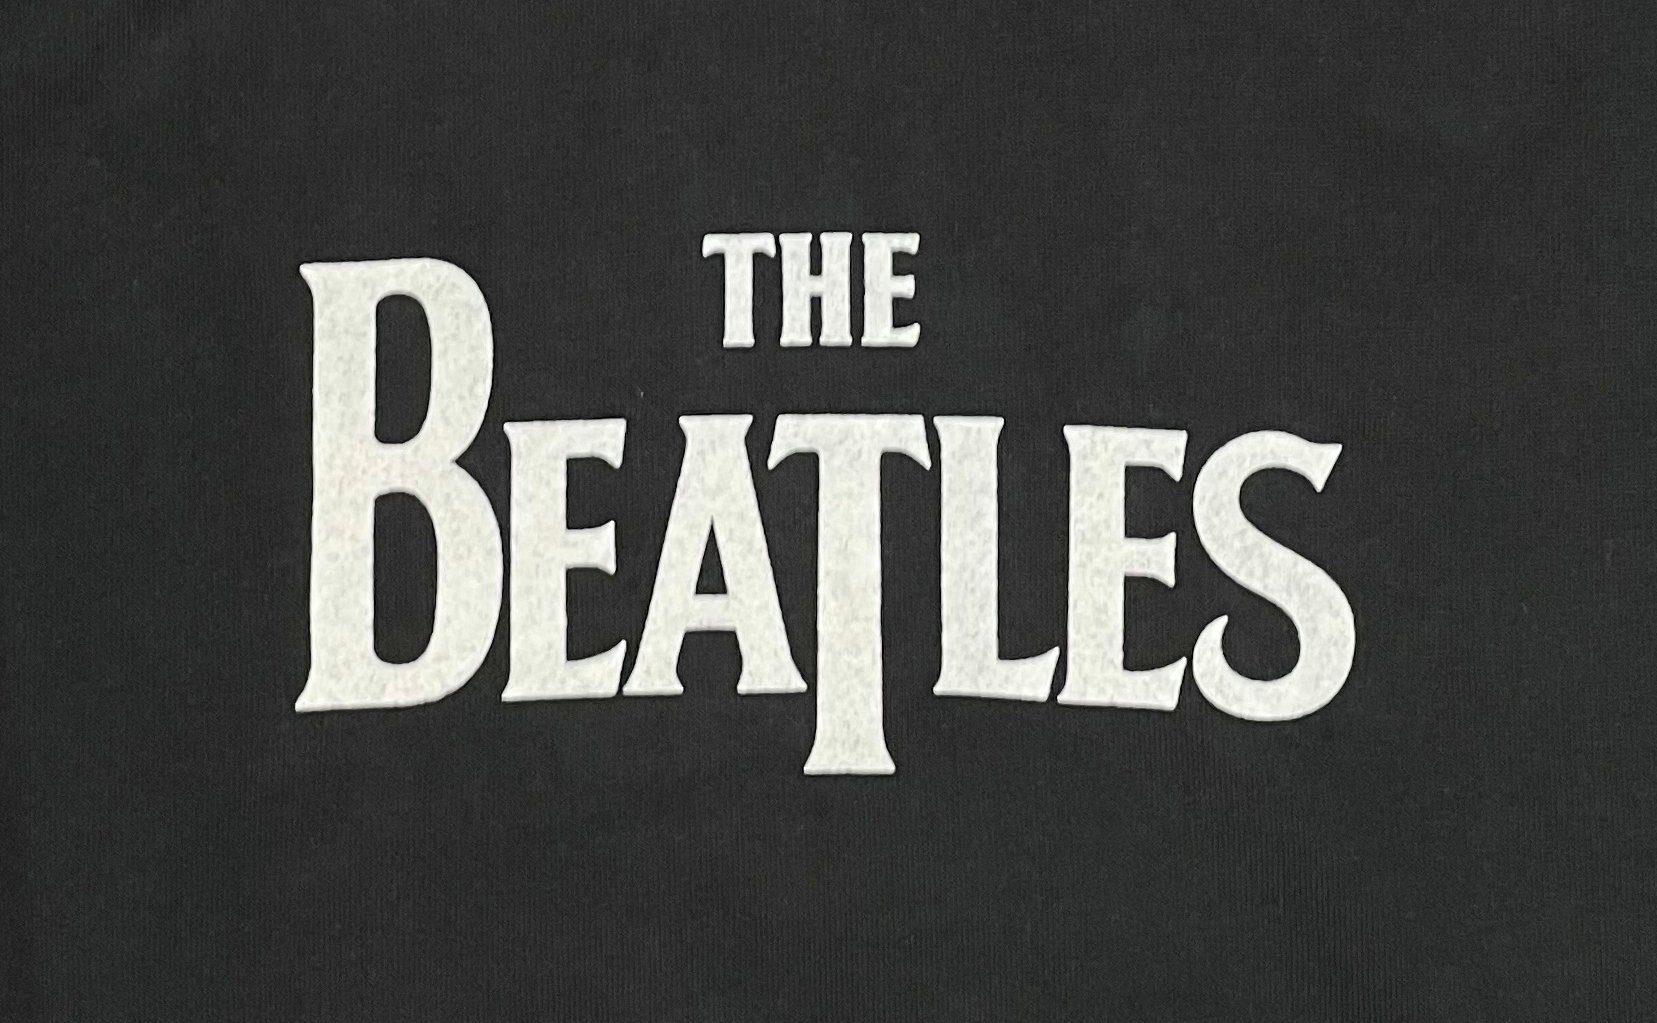 Stück) T-Shirt mit 1-tlg., Beatles black"/GOTS (Stück, Frontprint The Logo, "Classic